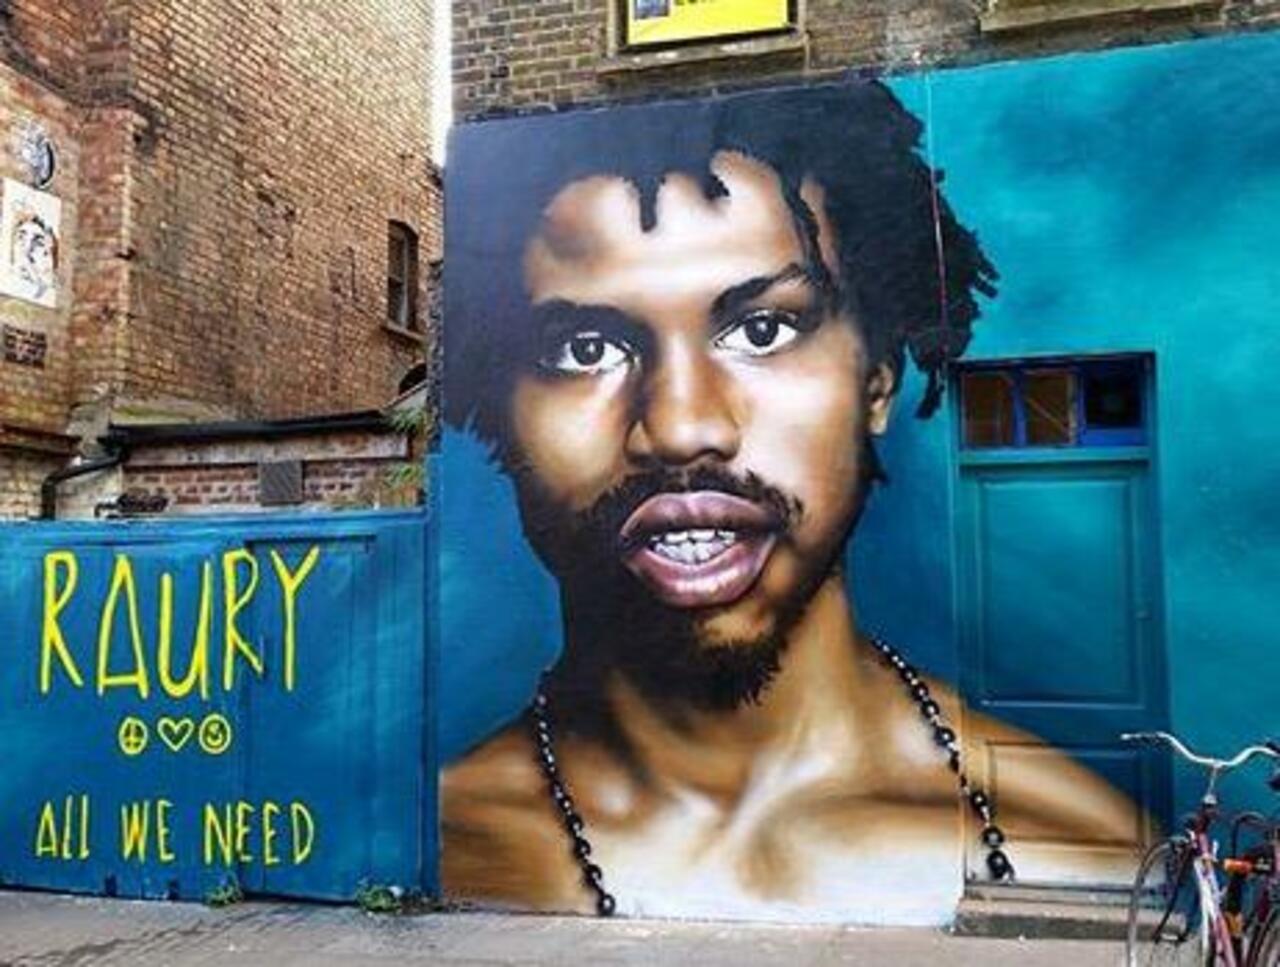 New Street Art of Raury by Olliver Switch in Brick Lane 

#art #graffiti #mural #streetart http://t.co/JO1N1CVFL2